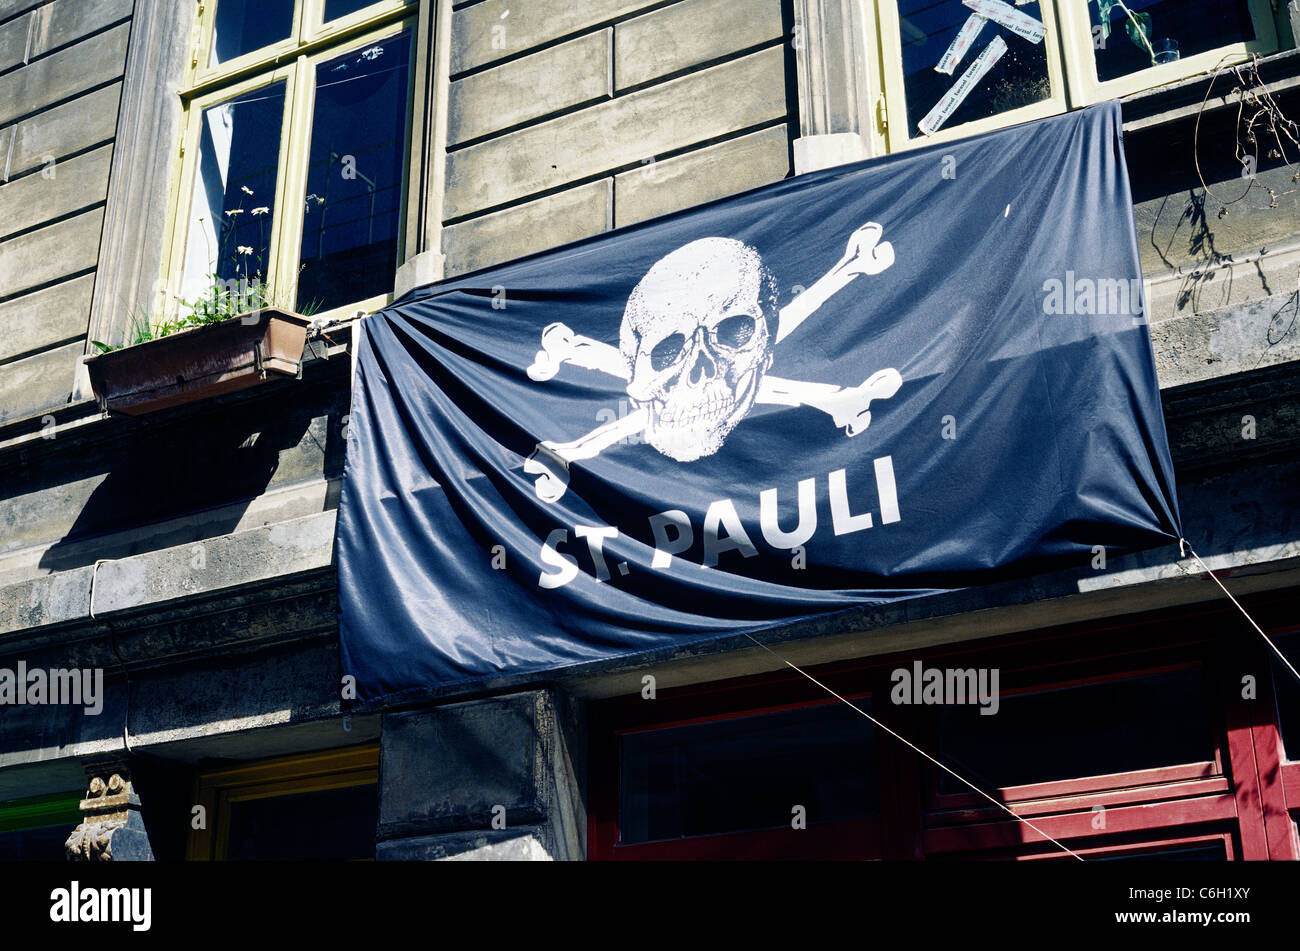 Supporter flag of FC Sankt Pauli football club outside a window in Sankt Pauli district of Hamburg. Stock Photo